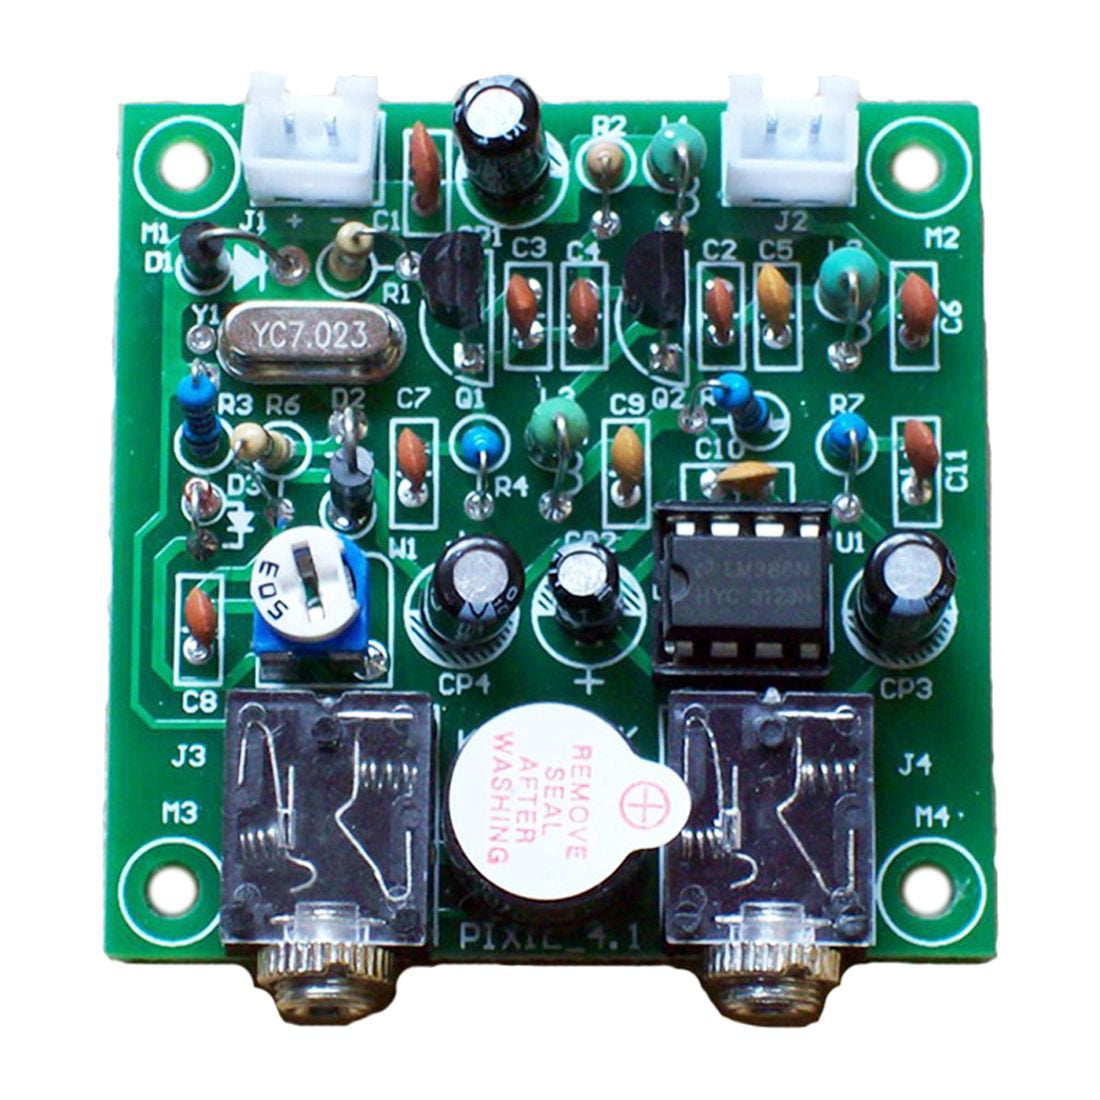 Radio 40M CW Shortwave Transmitter Receiver Version 4.1 7.023-7.026MHz QRP Pixie Kits DIY with Buzzer Transceiver